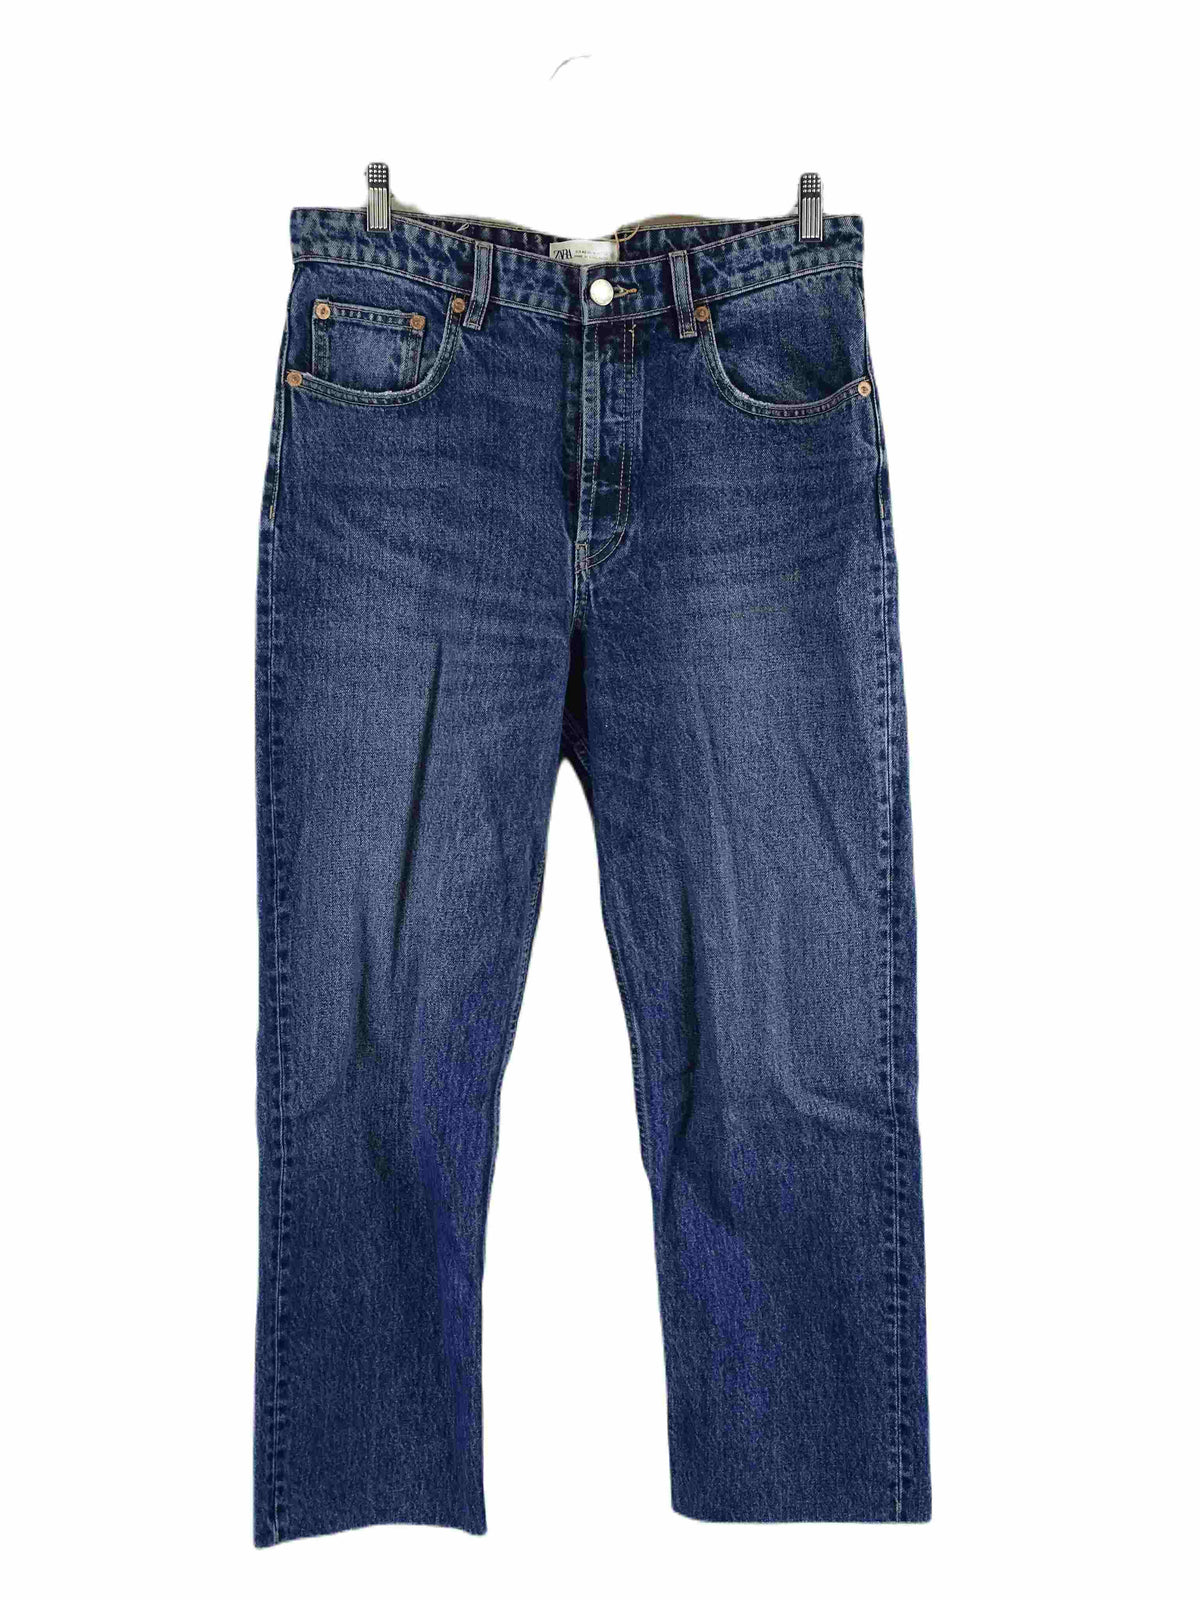 Zara Blue Jeans 14